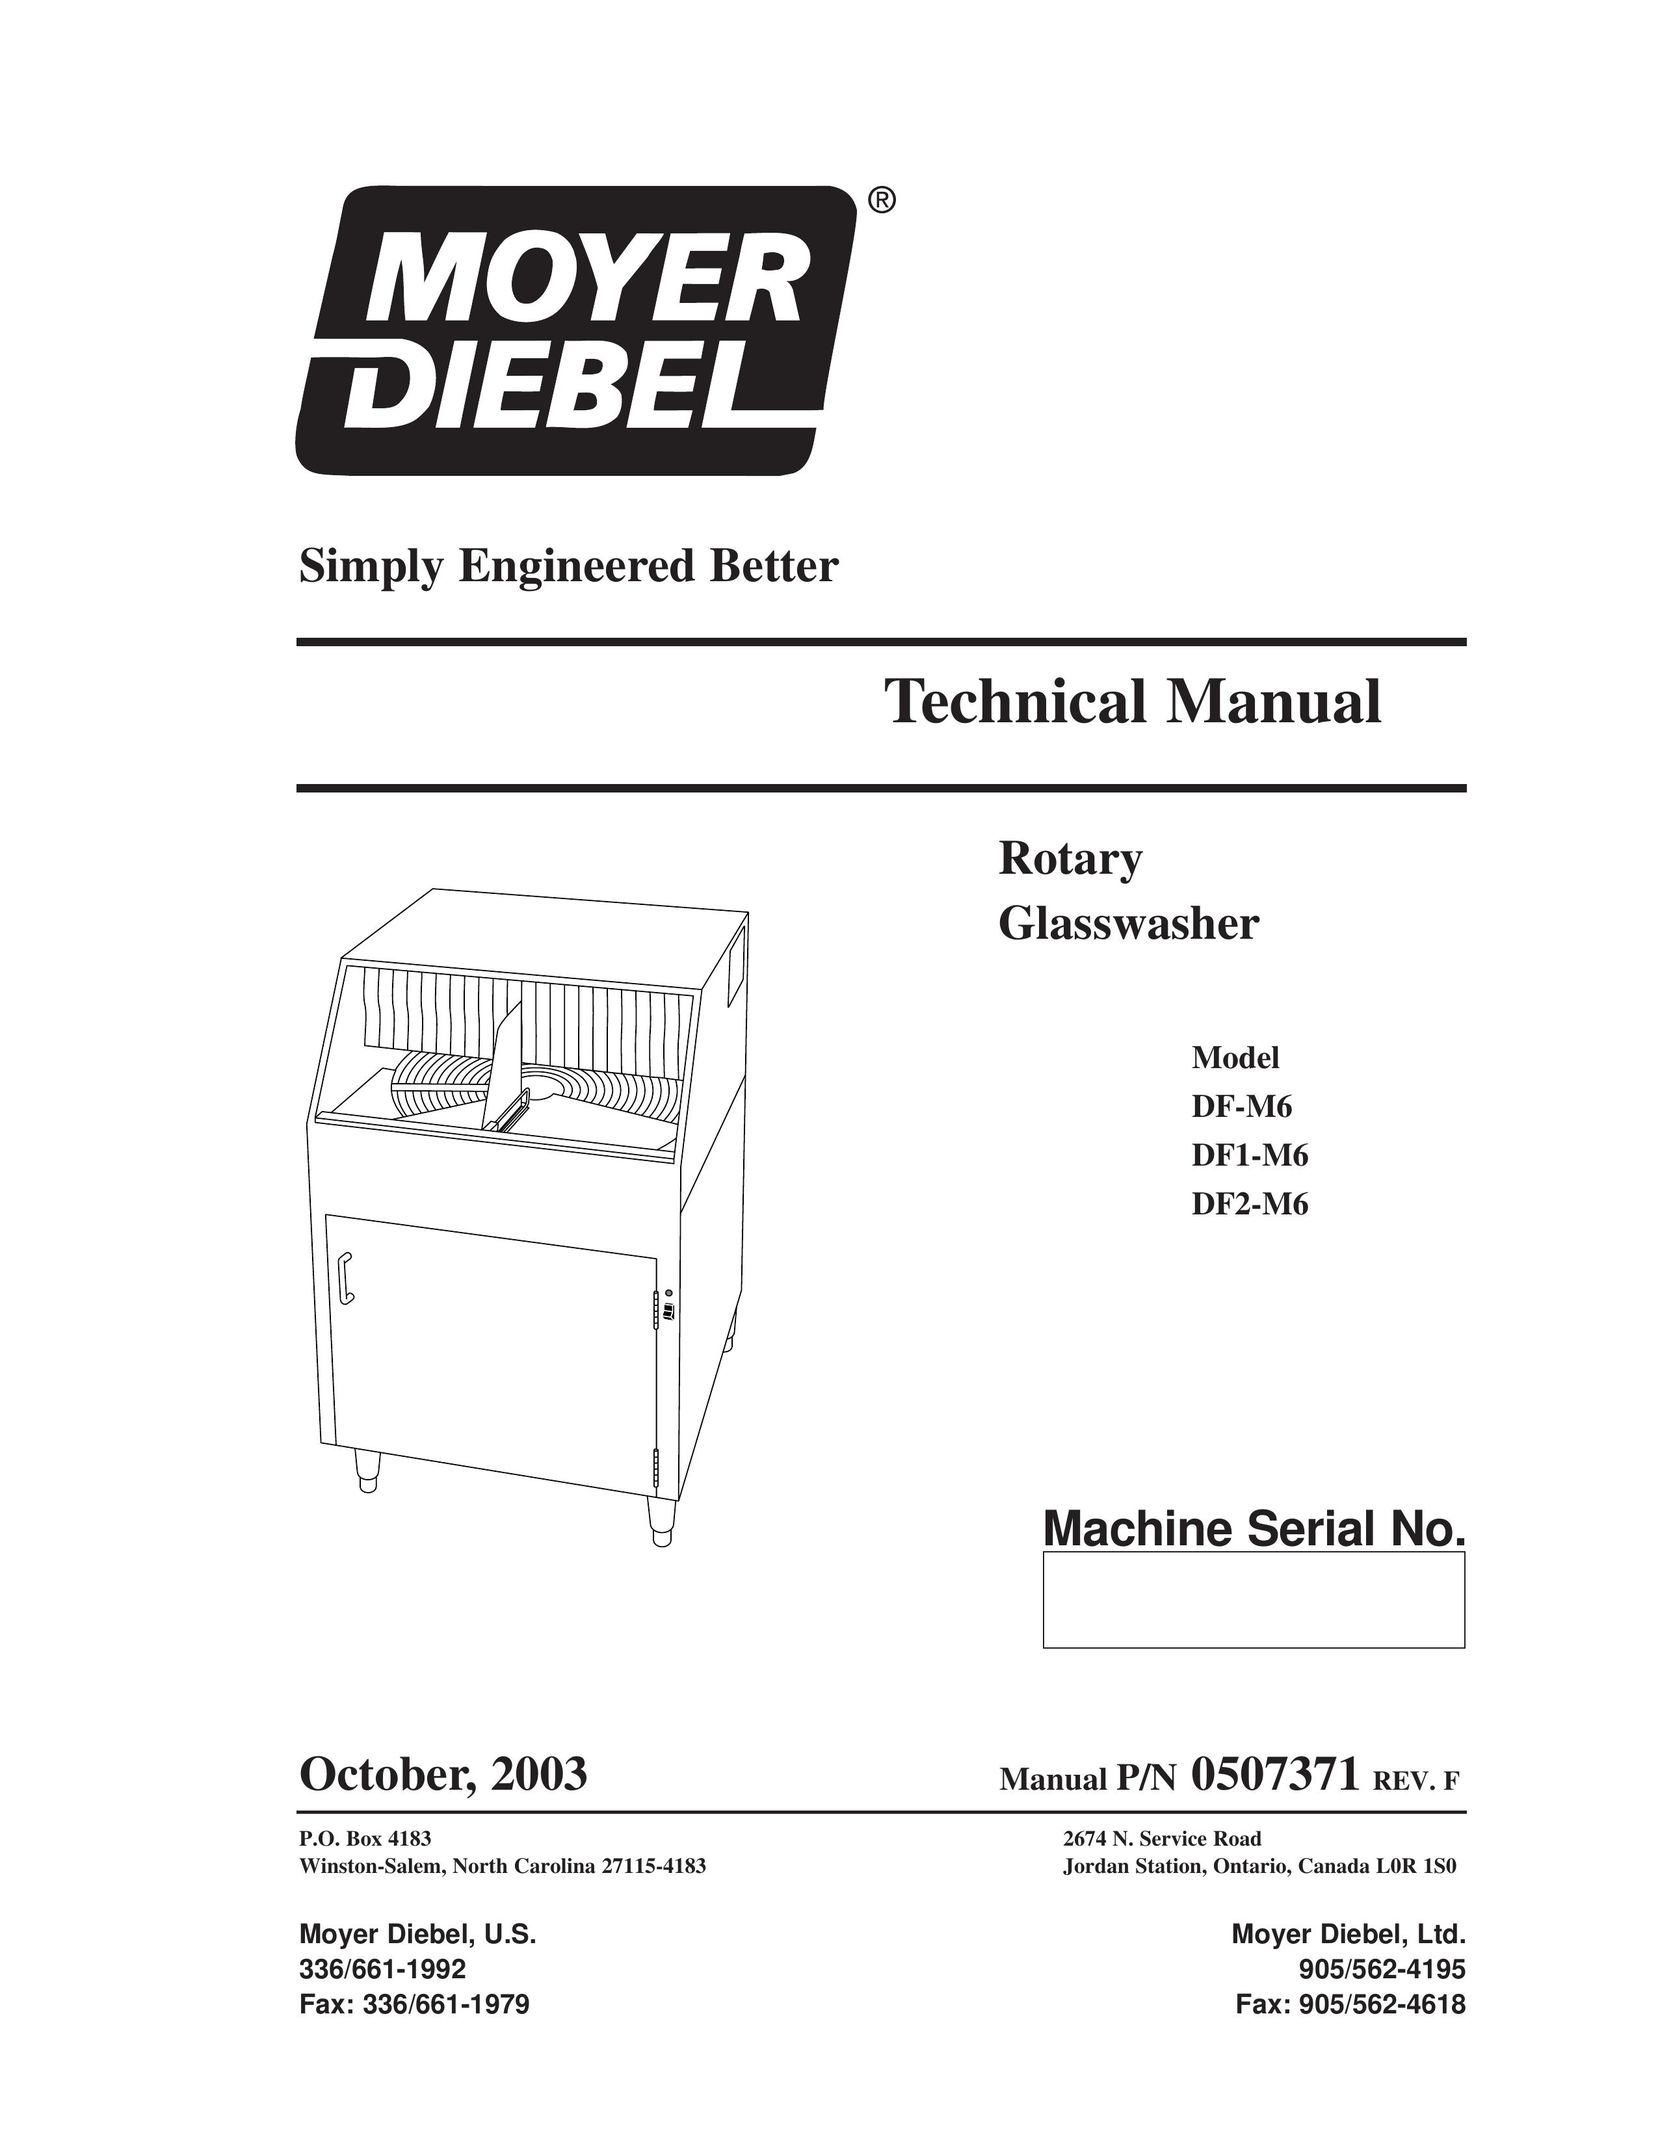 Moyer Diebel DF1-M6 Dishwasher User Manual